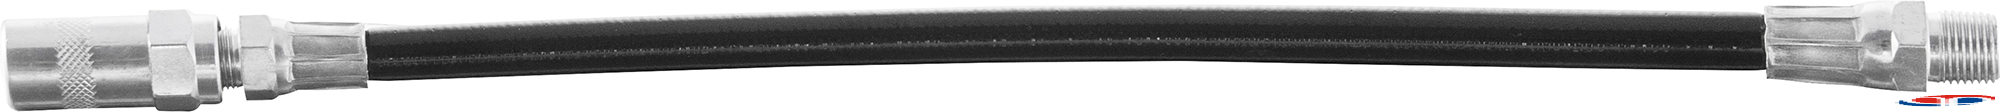 Шланг гибкий для шприца, 450 мм